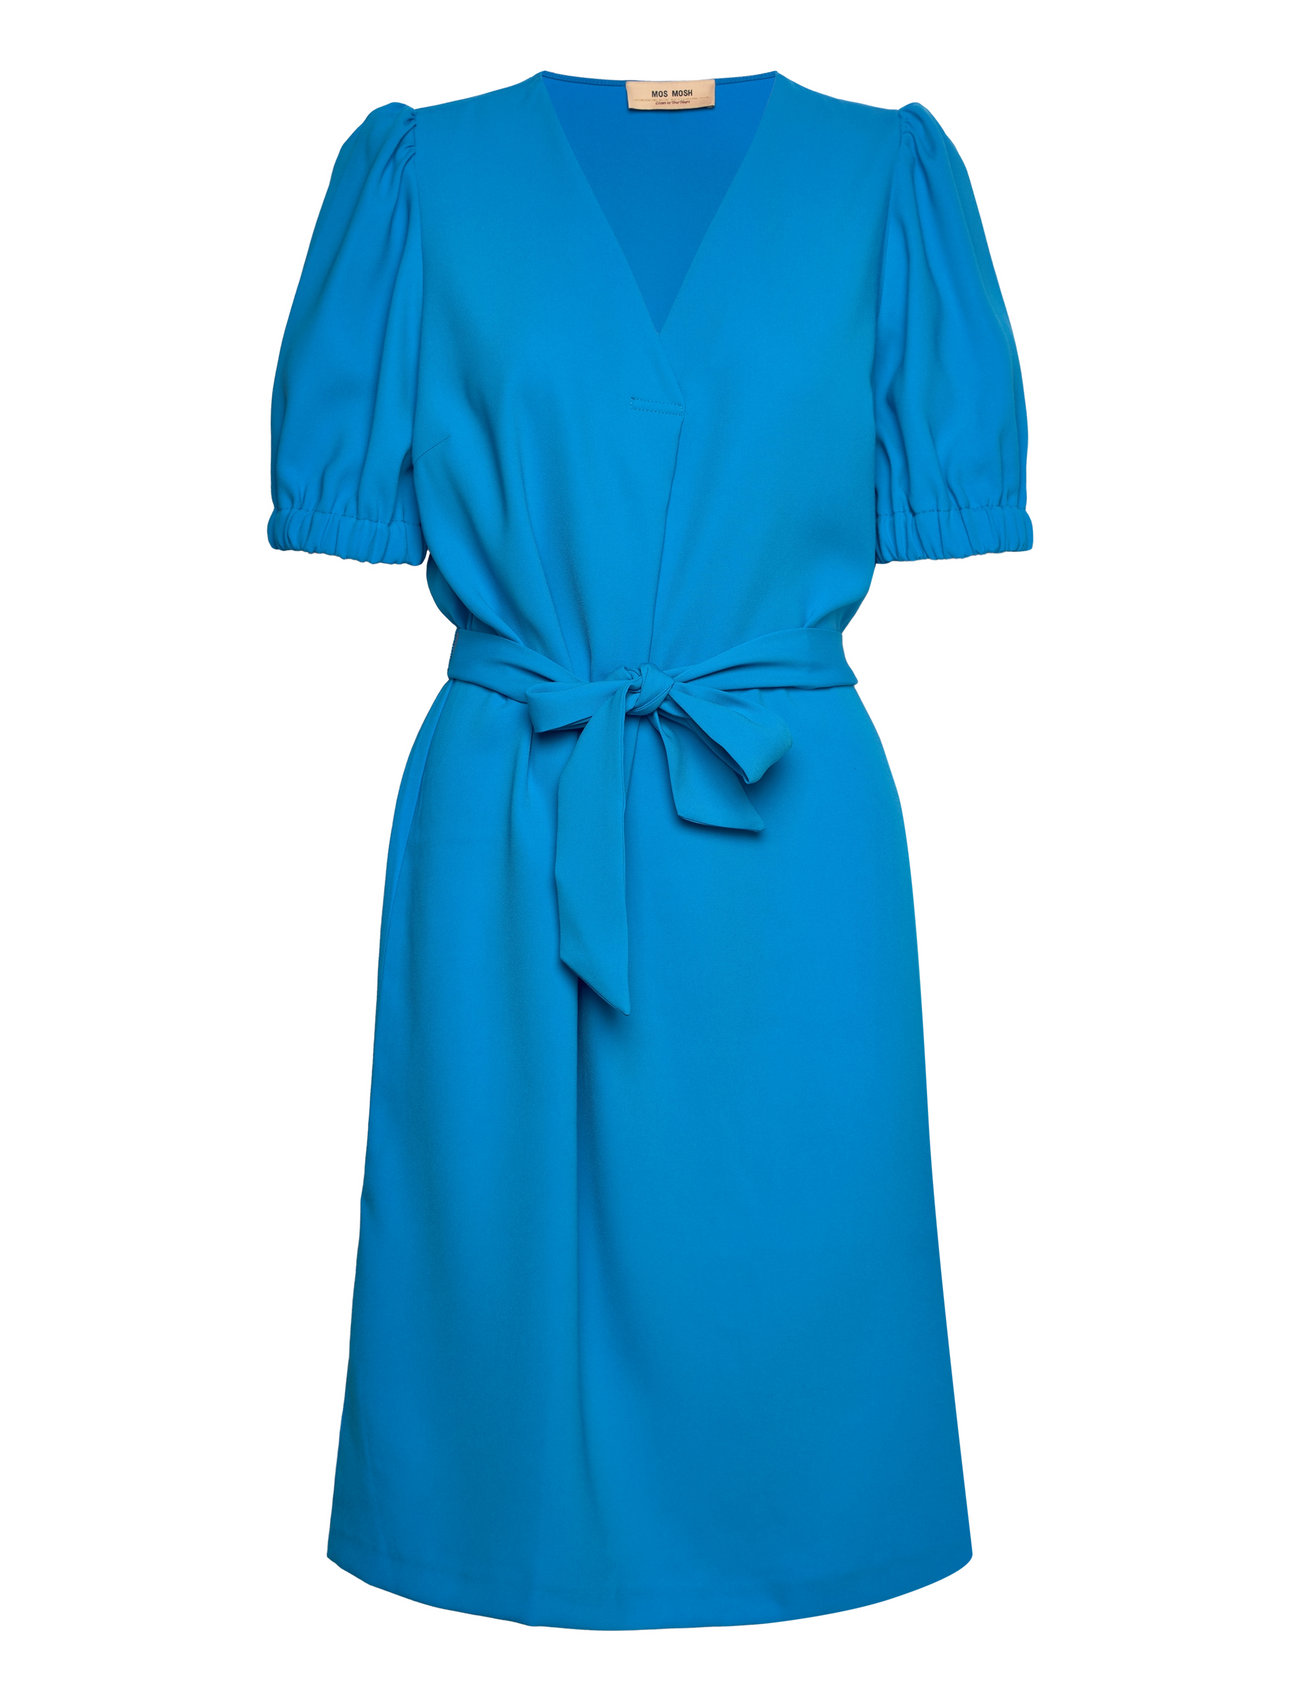 MOS MOSH Maeve Leia Dress - Midi dresses - Boozt.com